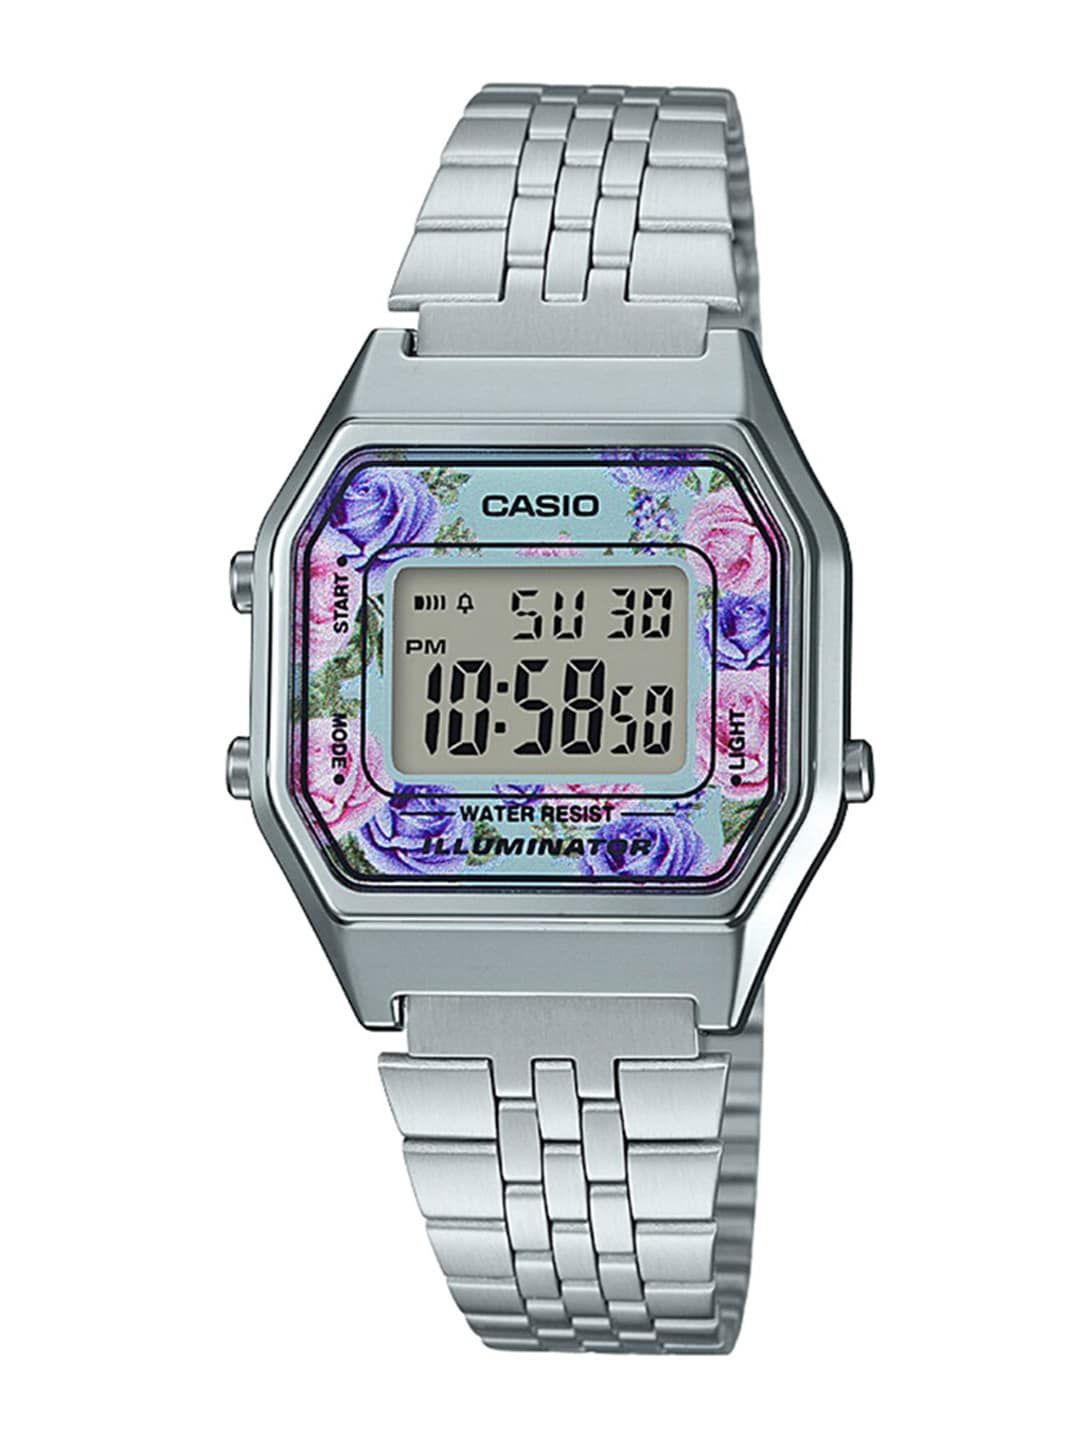 CASIO Unisex Silver-Toned Digital Watch D203 Price in India